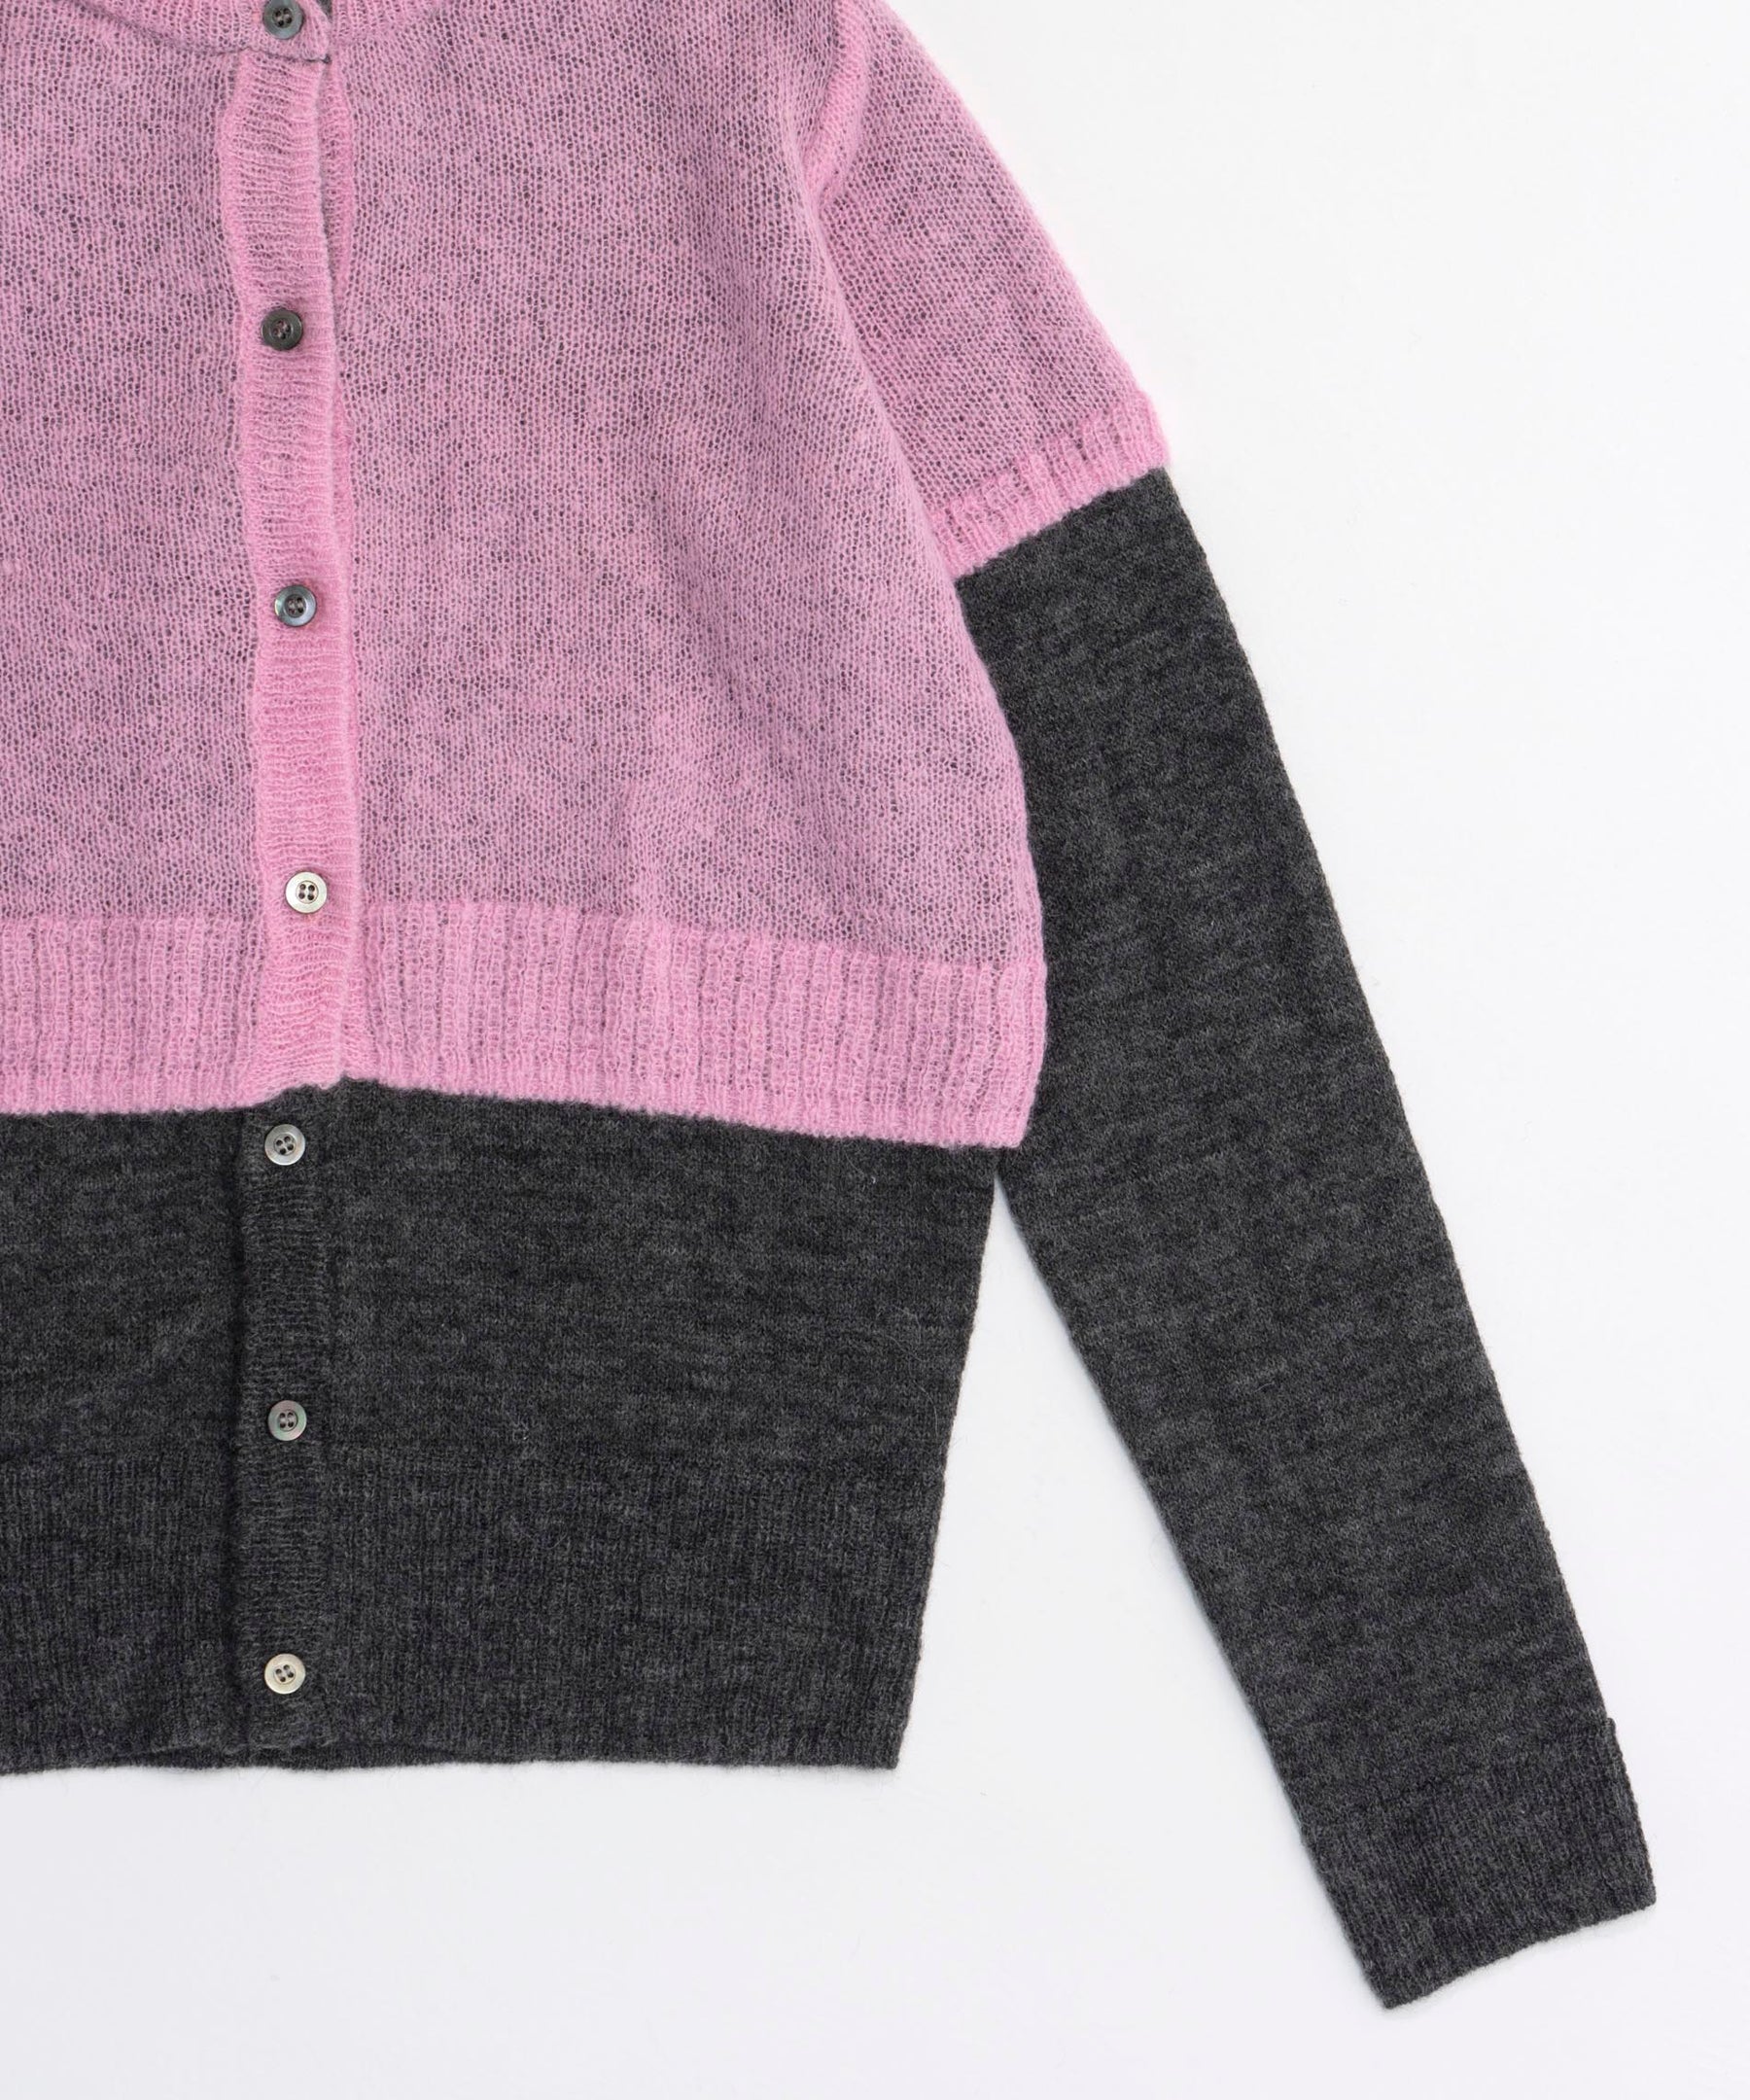 【24AUTUMN PRE-ORDER】Reversible Knit Cardigan